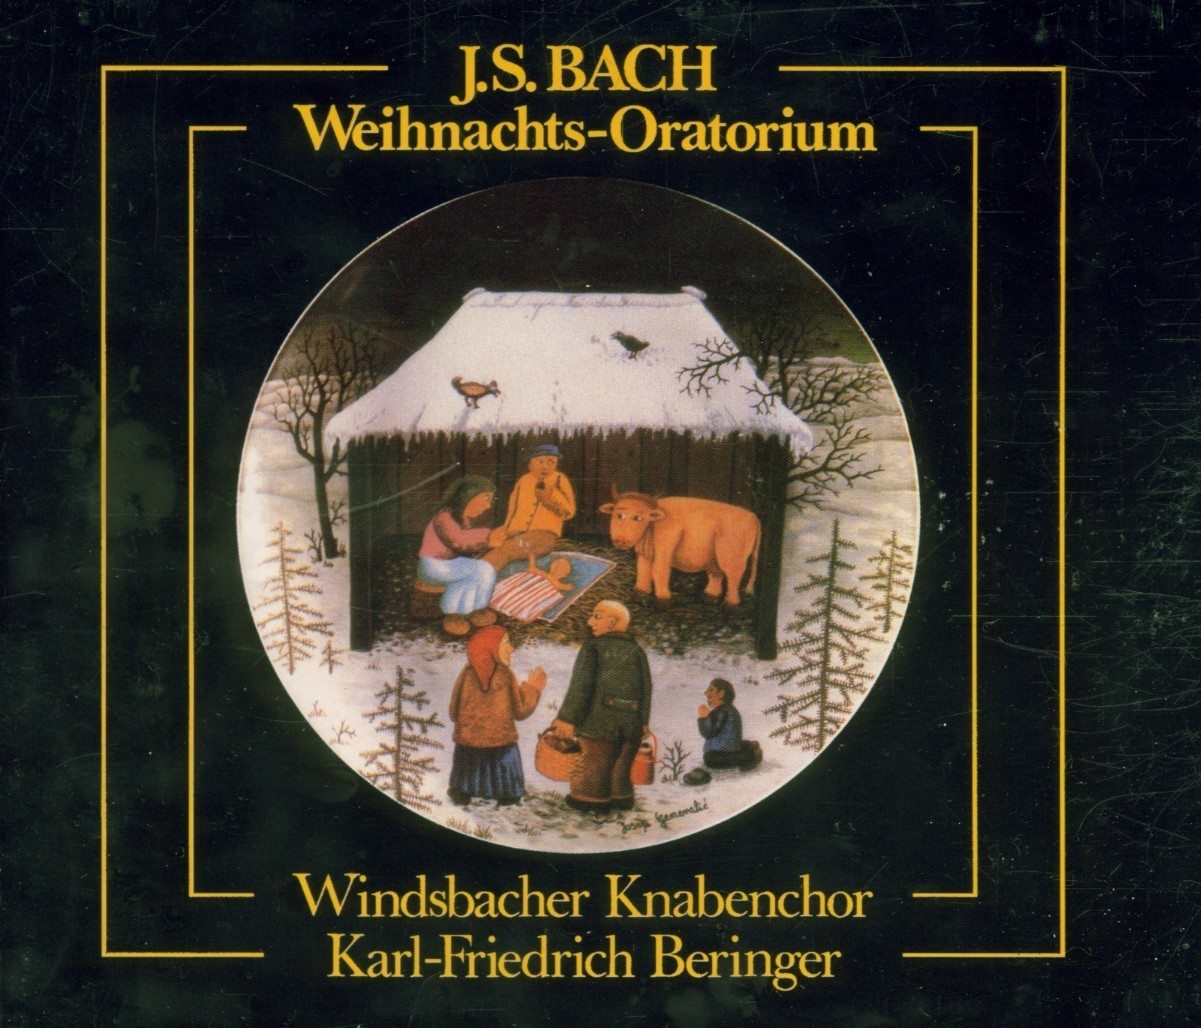 J.S. Bach - Weihnachts-Oratorium  3 CDs - Windsbacher Knabenchor. (CD)